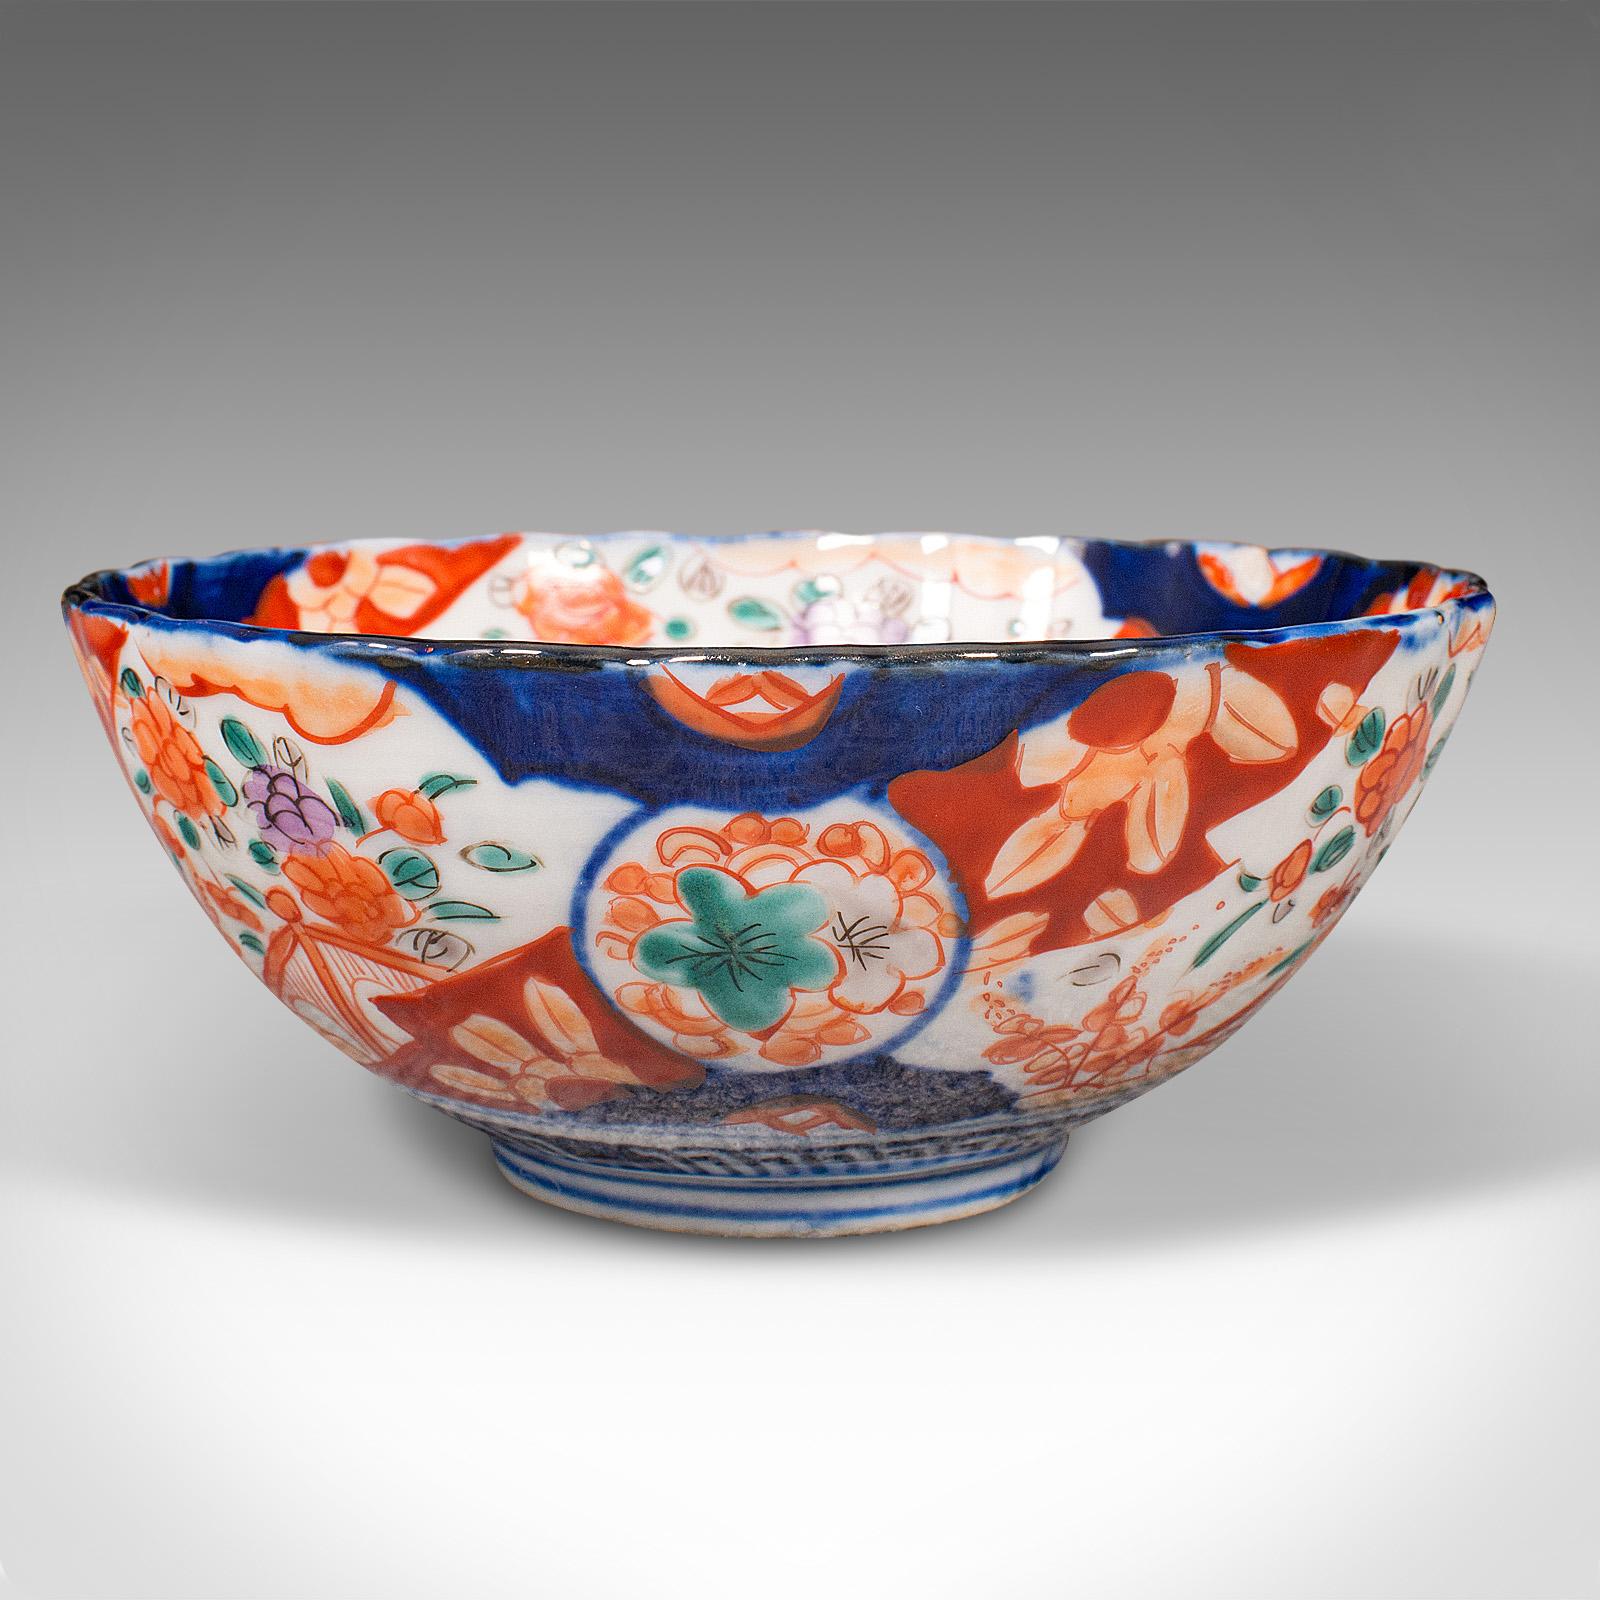 Small Antique Imari Bowl, Japanese, Ceramic, Decorative Dish, Meiji, Victorian In Good Condition For Sale In Hele, Devon, GB